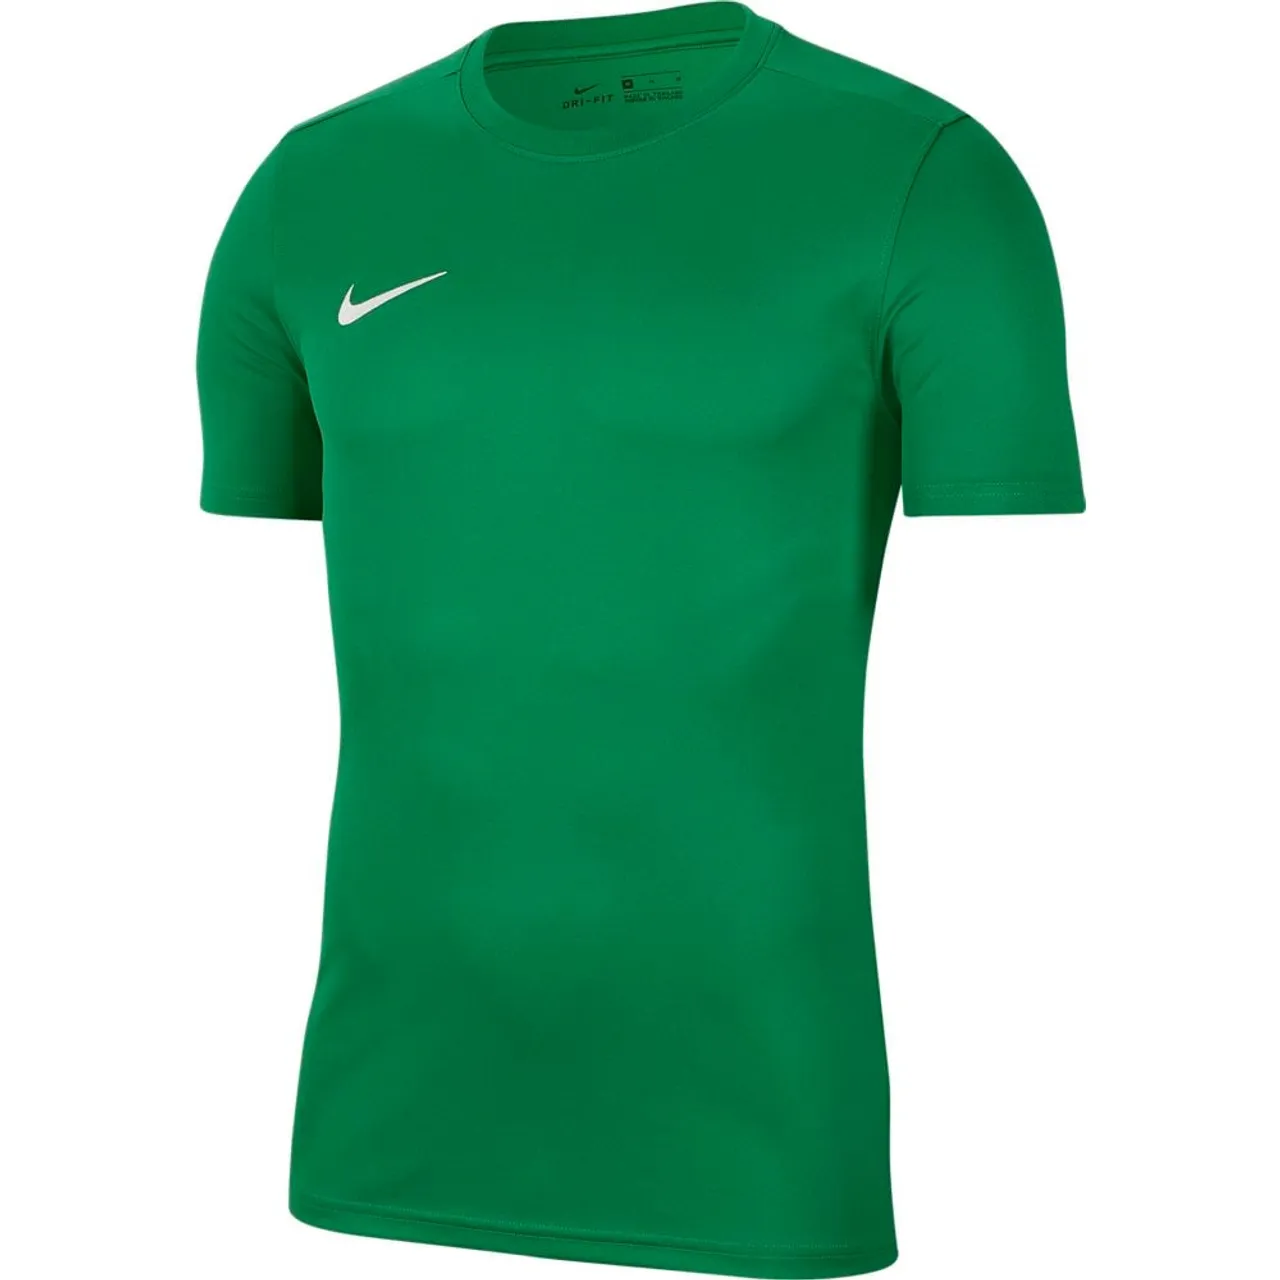 Nike Dry Park VII Voetbalshirt Groen